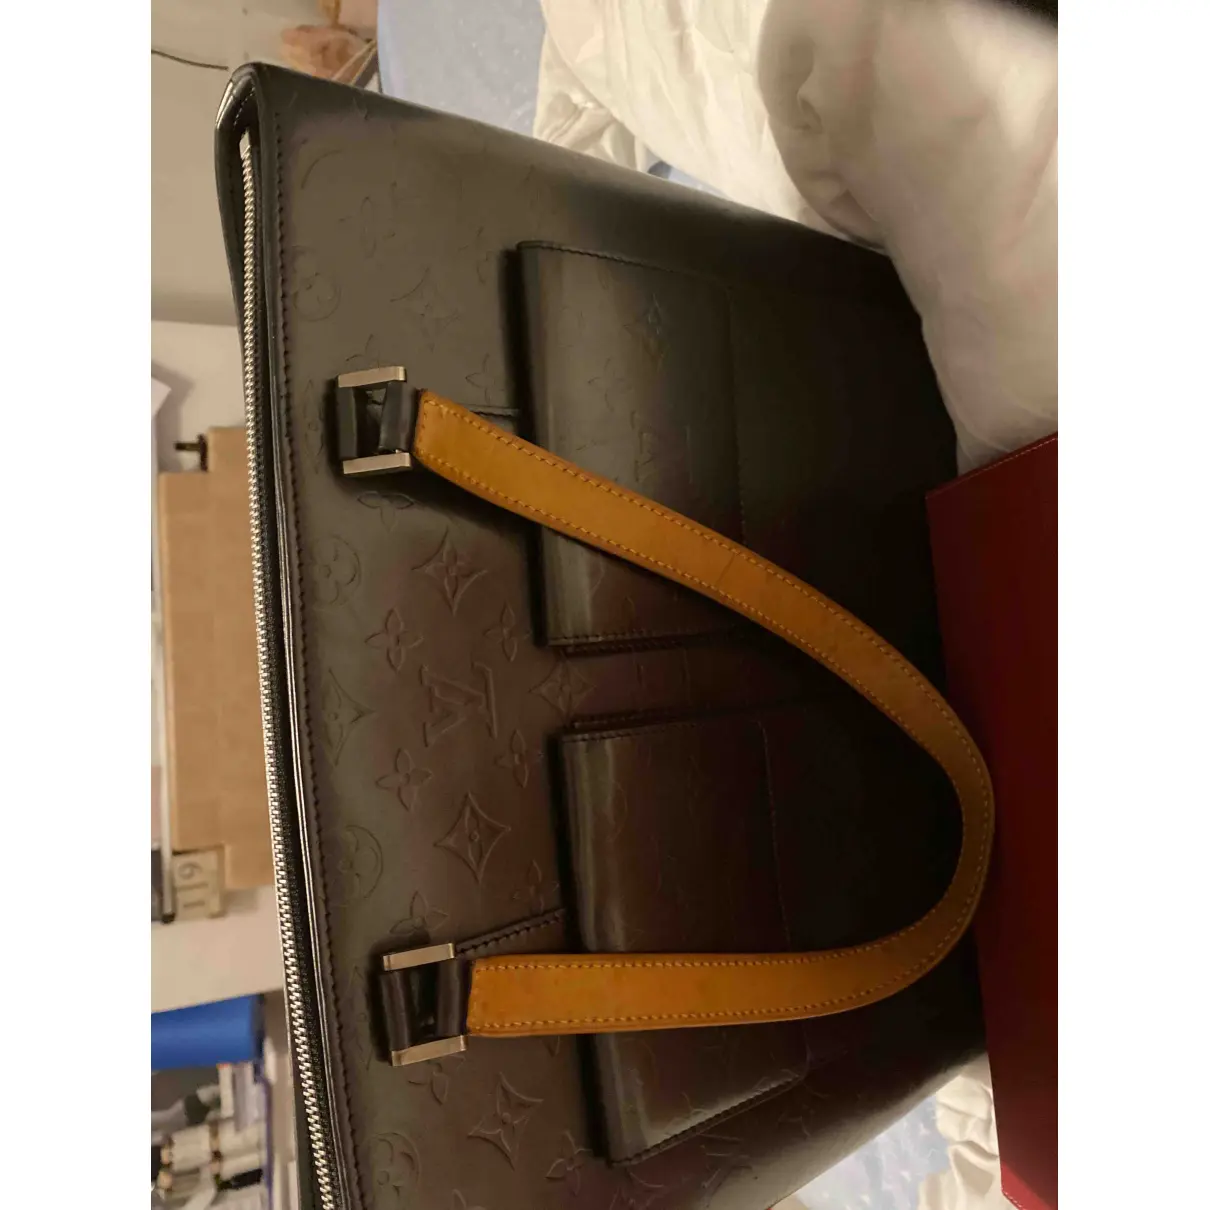 Buy Louis Vuitton Tote W patent leather handbag online